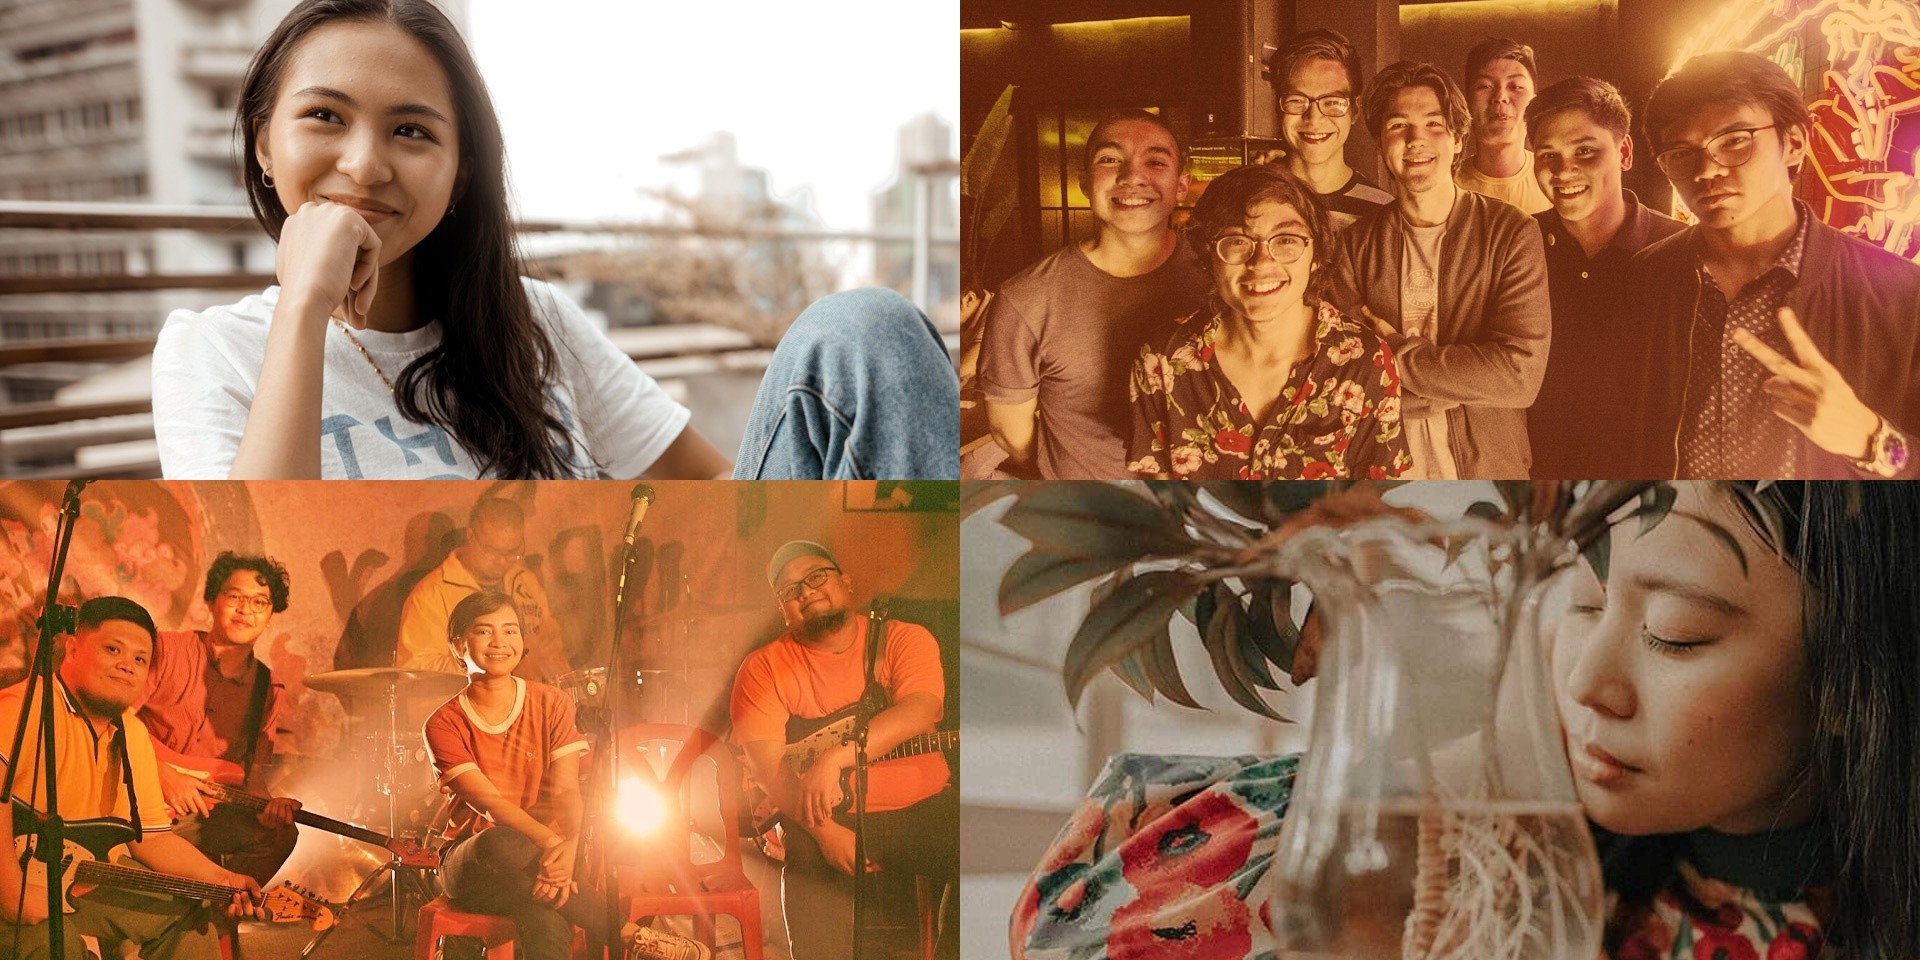 Tagaytay Art Beat 4 unveils first wave lineup – Clara Benin, Reese Lansangan, Lola Amour, Ang Bandang Shirley, and more confirmed